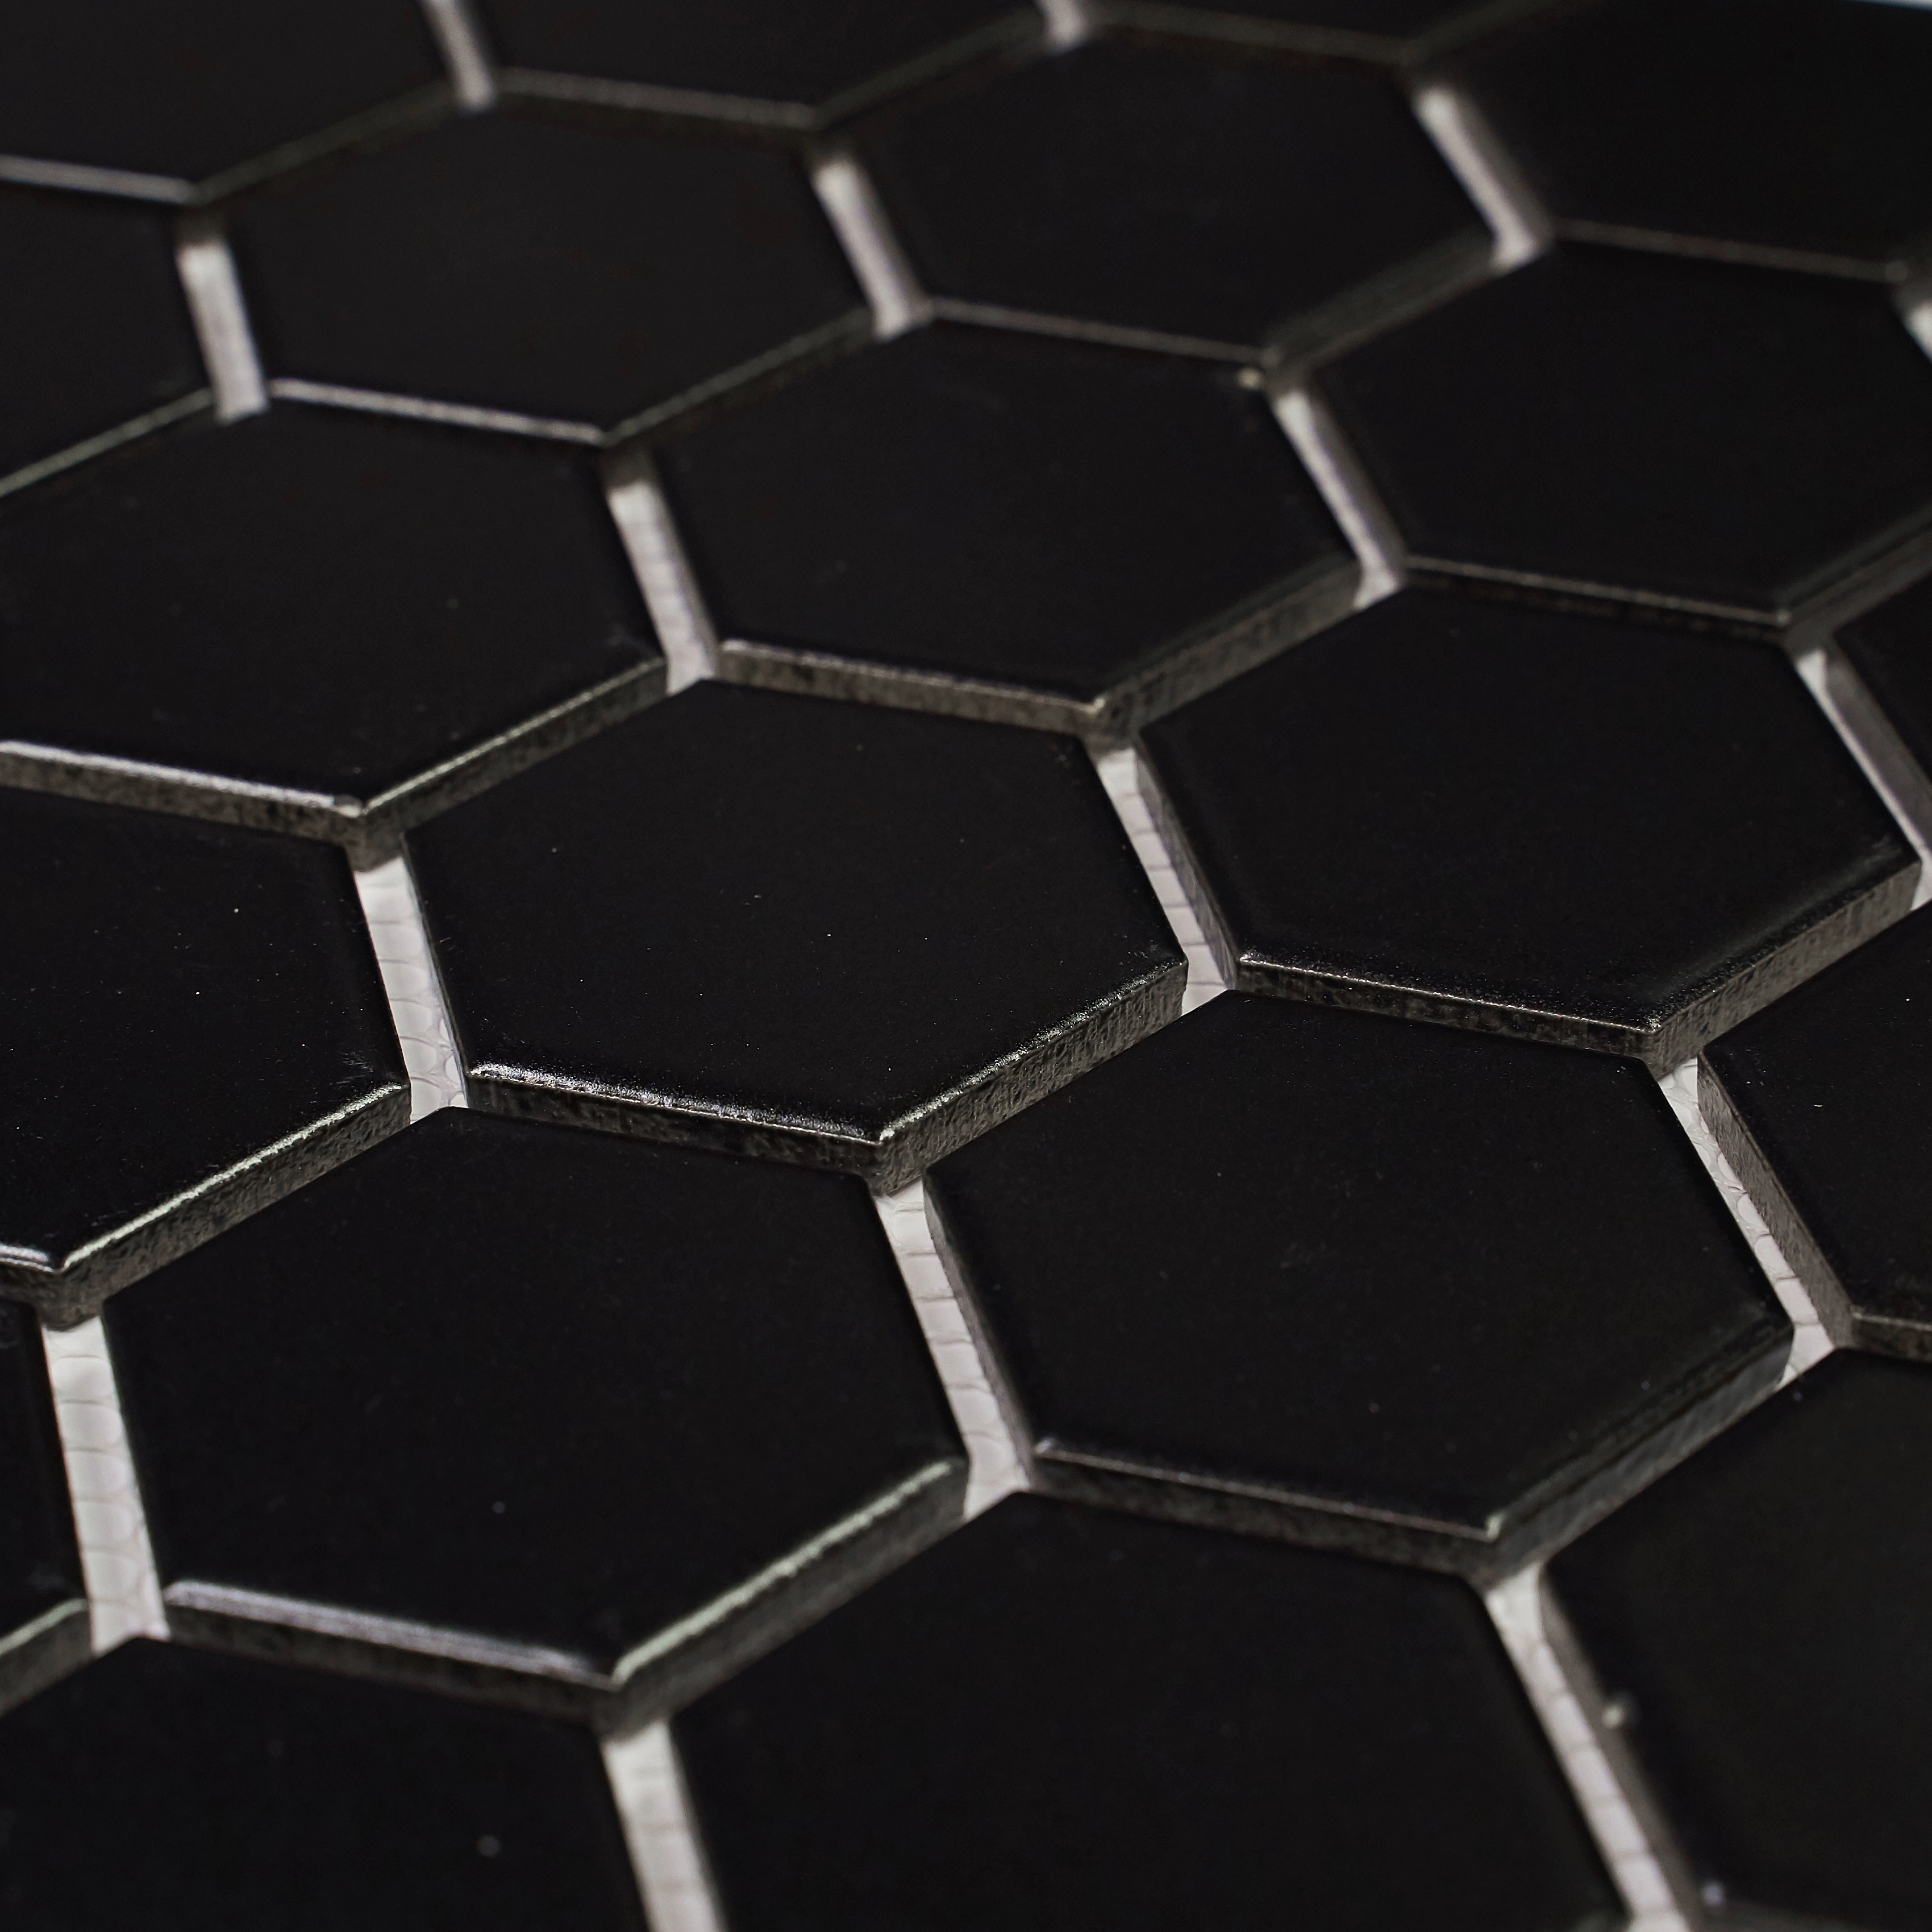 Мозаика L'Universo Dark Hexagon, 51х59х6 мм, MOSAICSTORY 30321